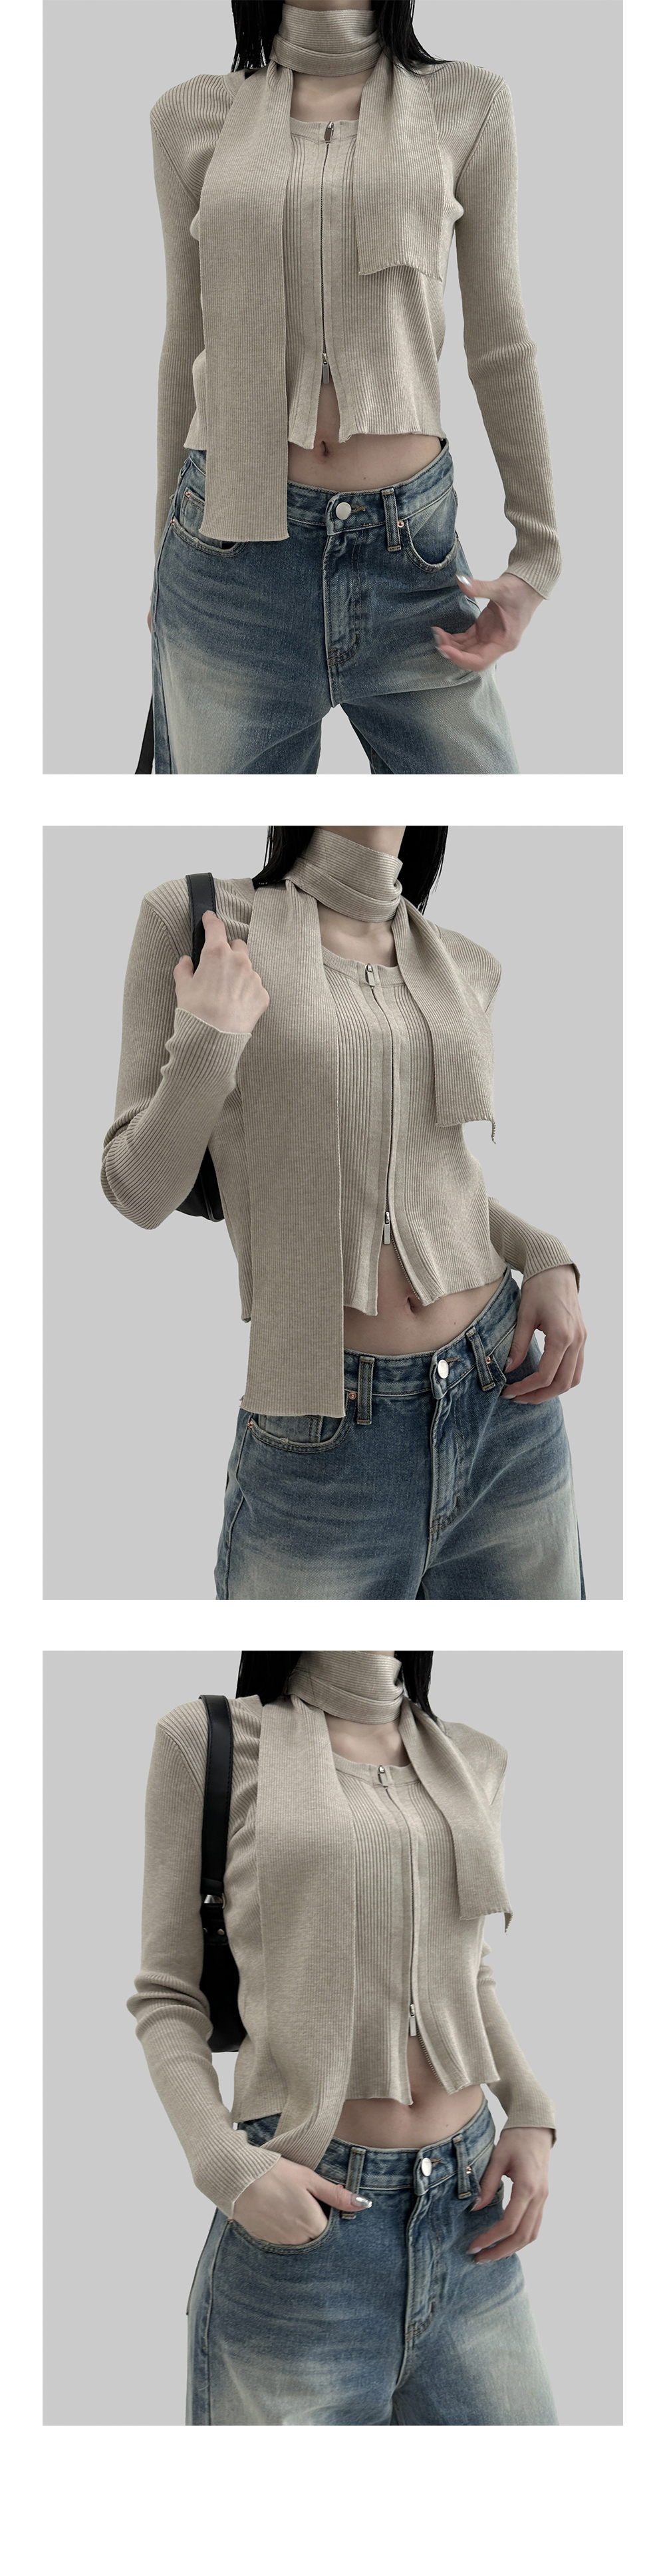 suspenders skirt/pants model image-S1L14